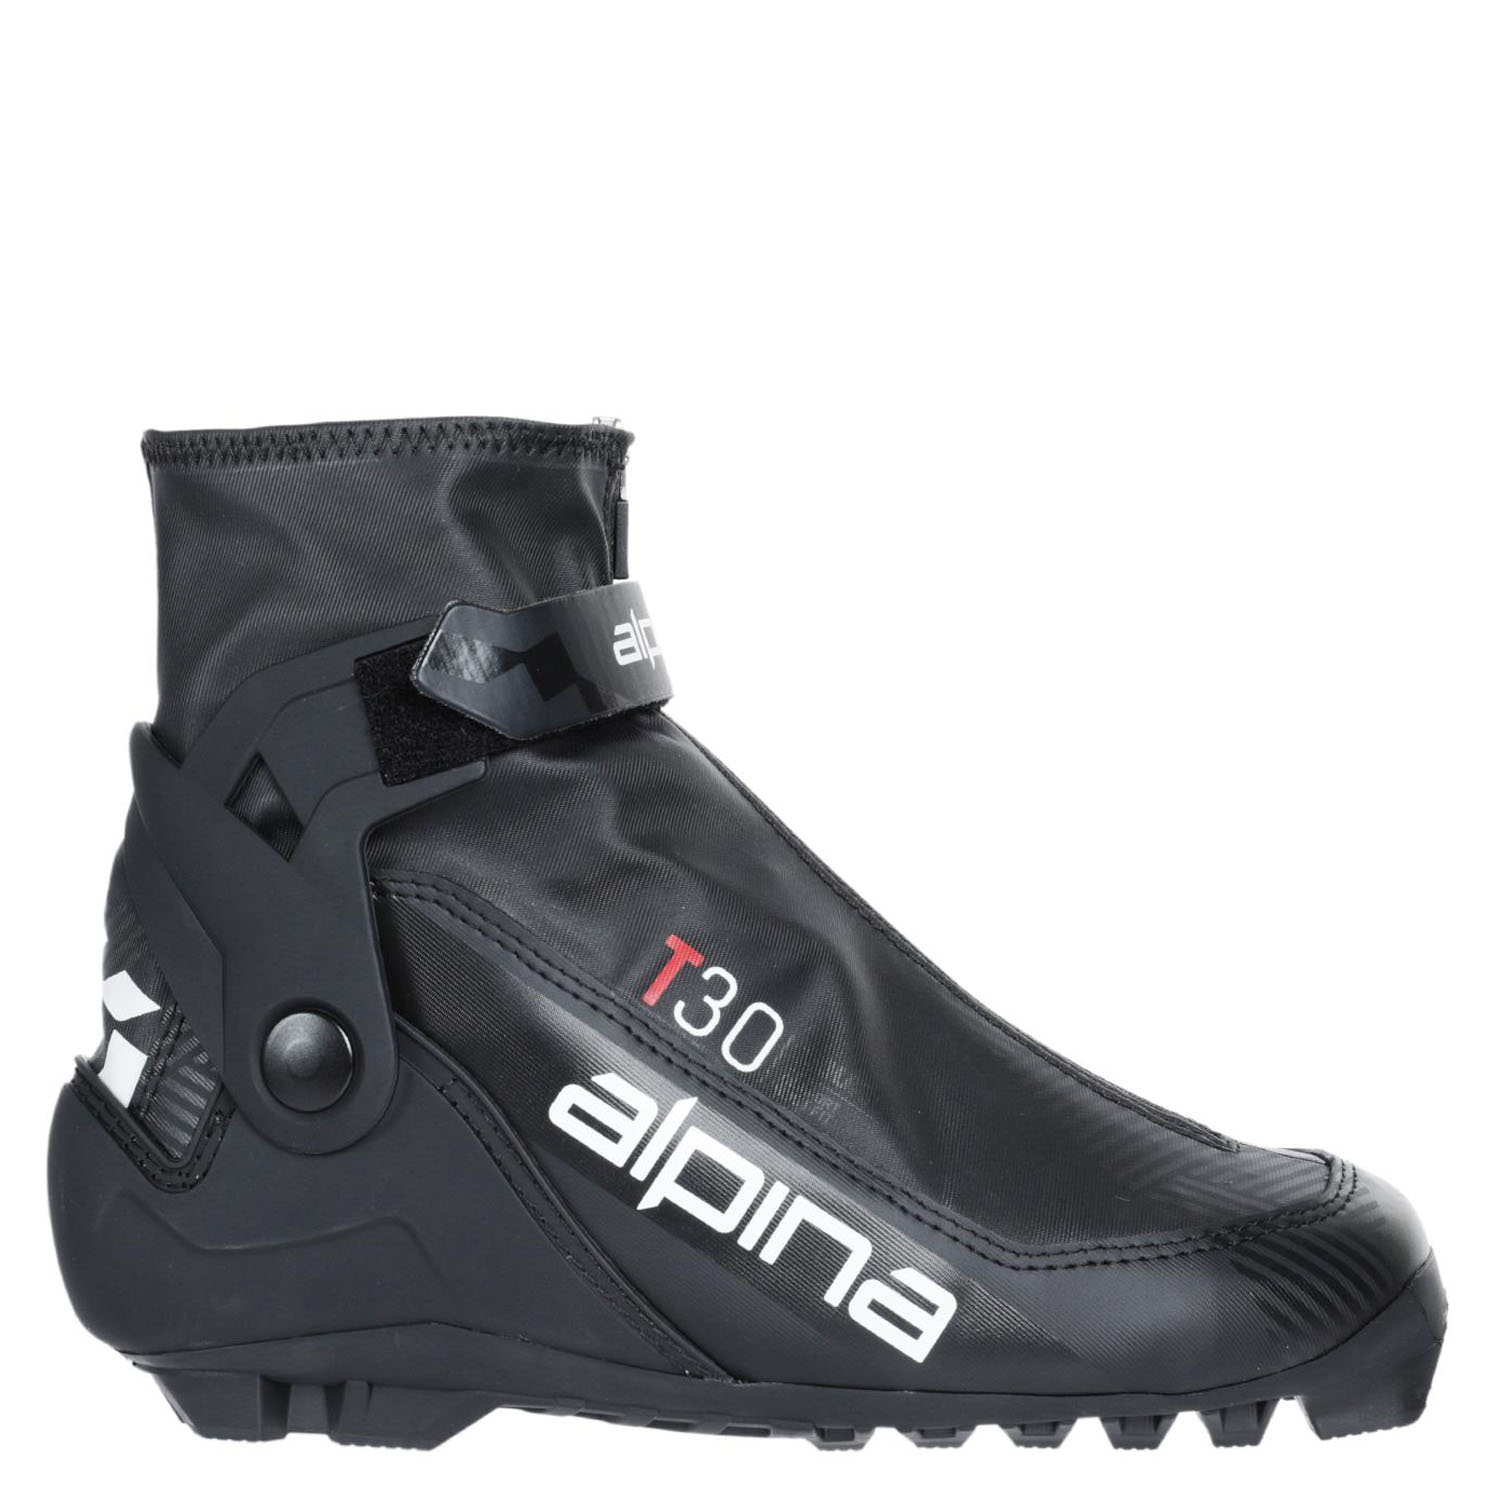 Лыжные ботинки Alpina. T 30 Black/White/Red